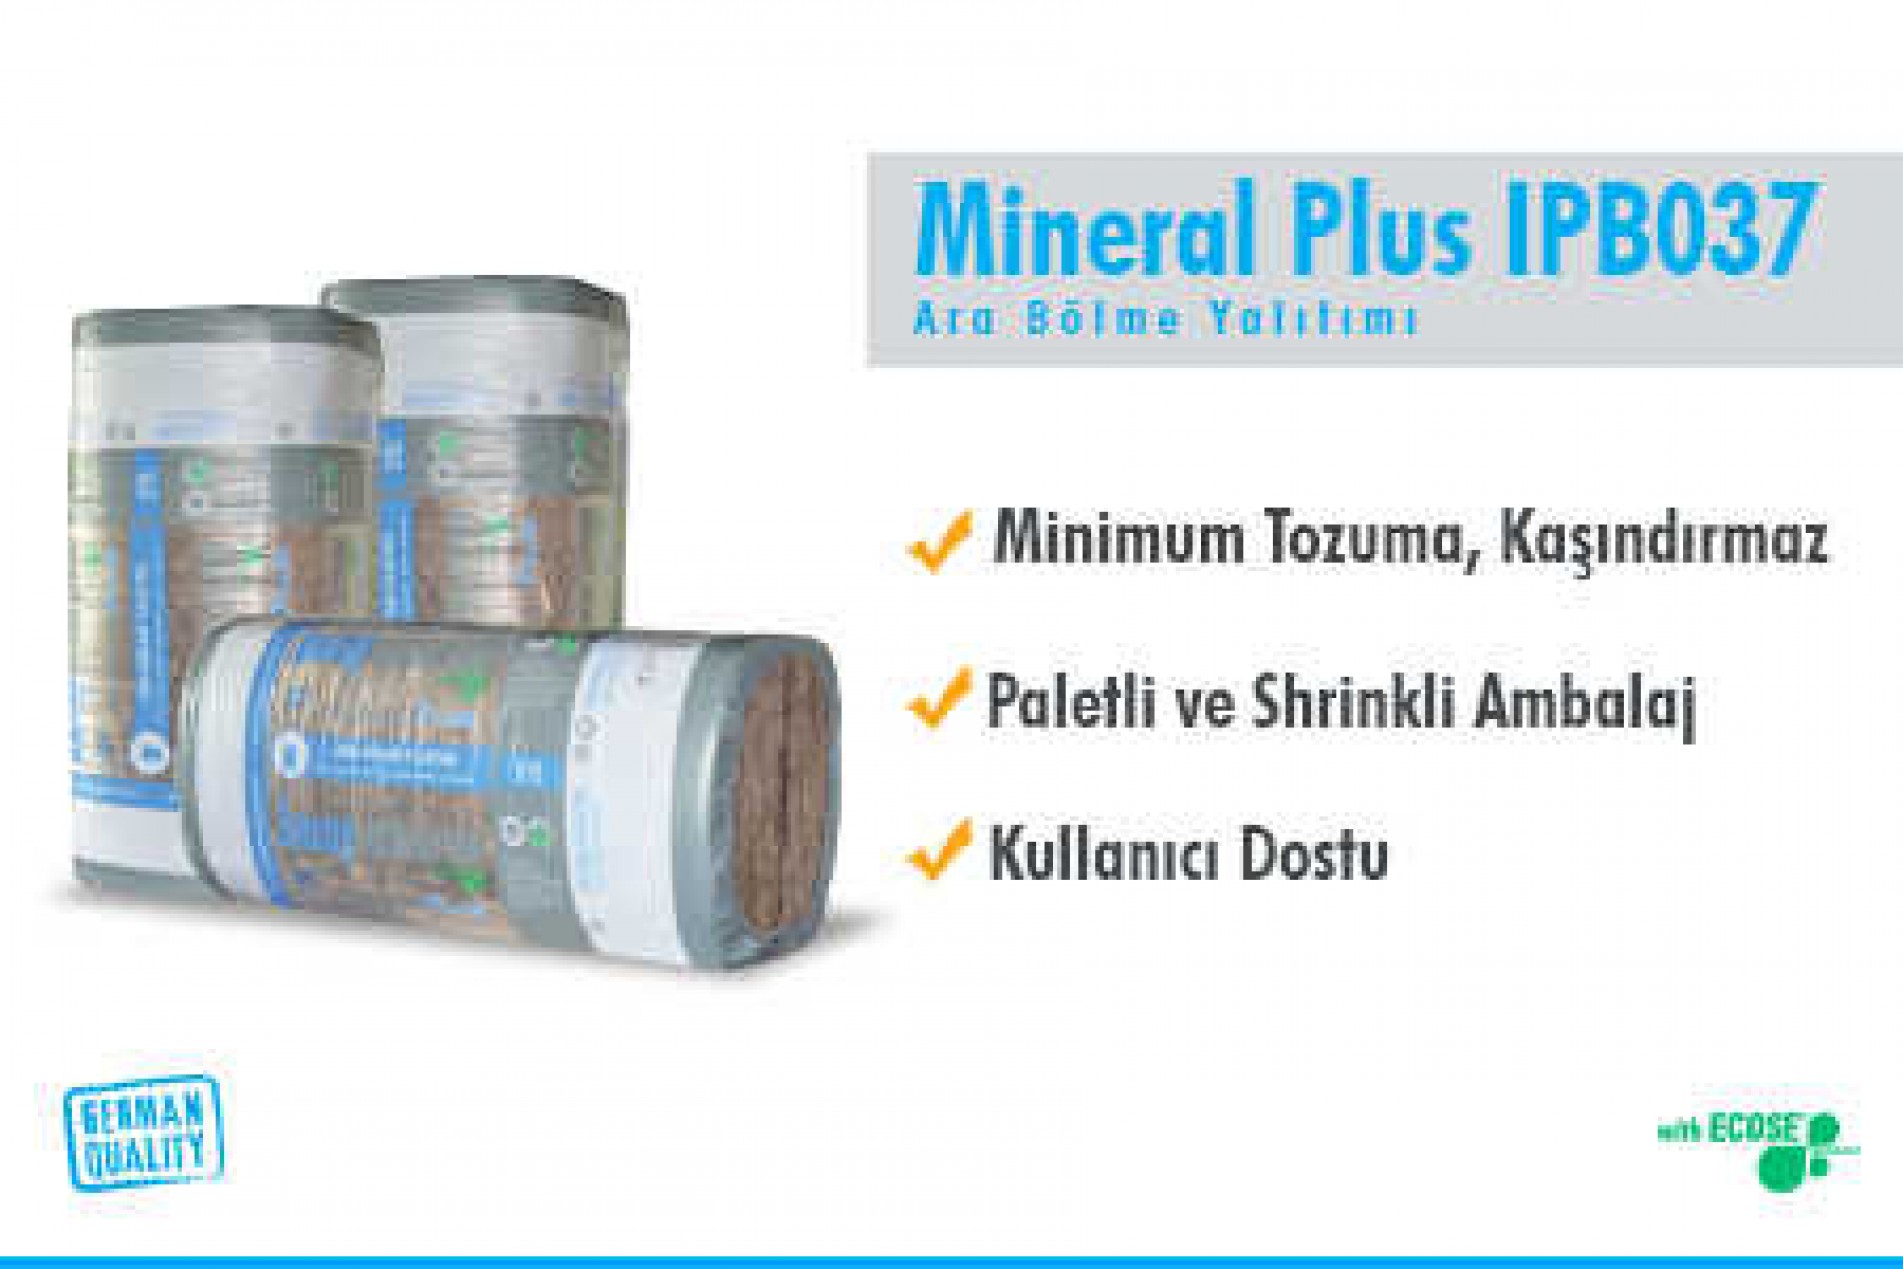 Ara Bölme Yalıtımı - Mineral Plus IPB037